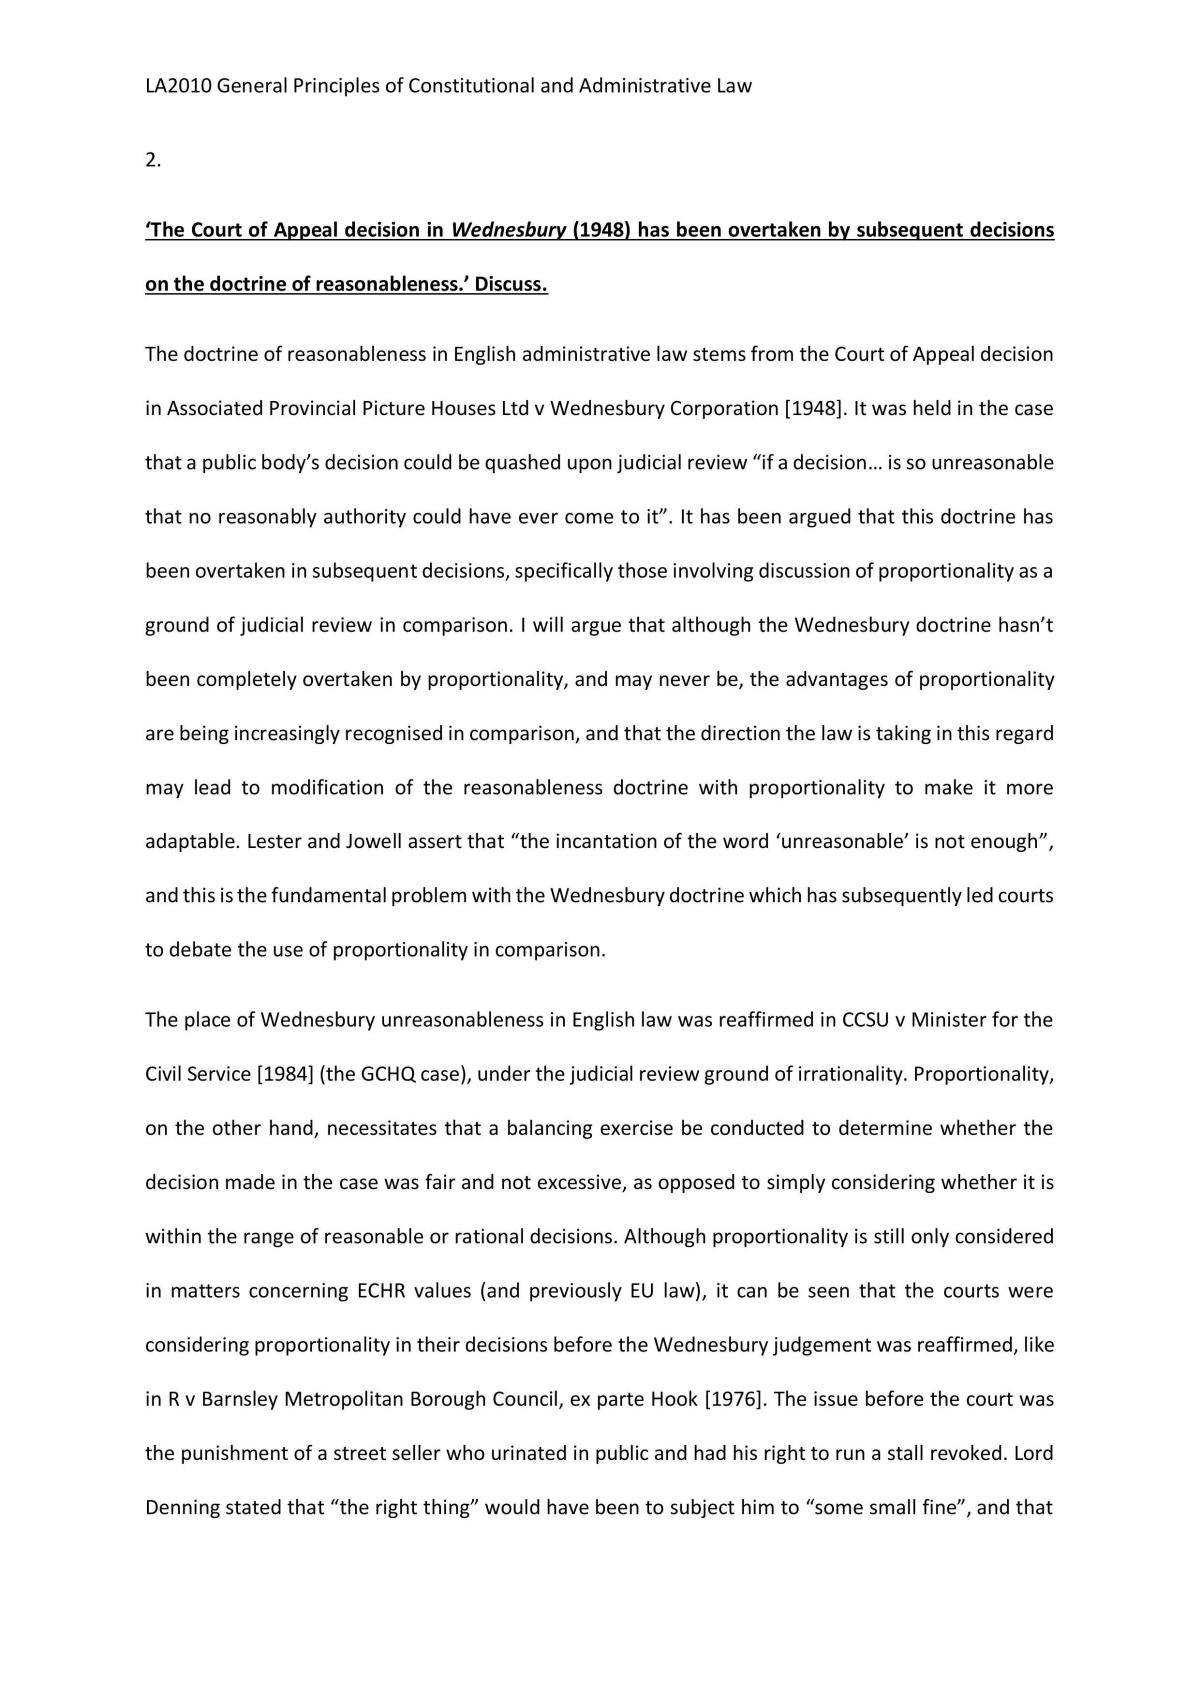 CONAD Law Exemplar Essays - Page 1